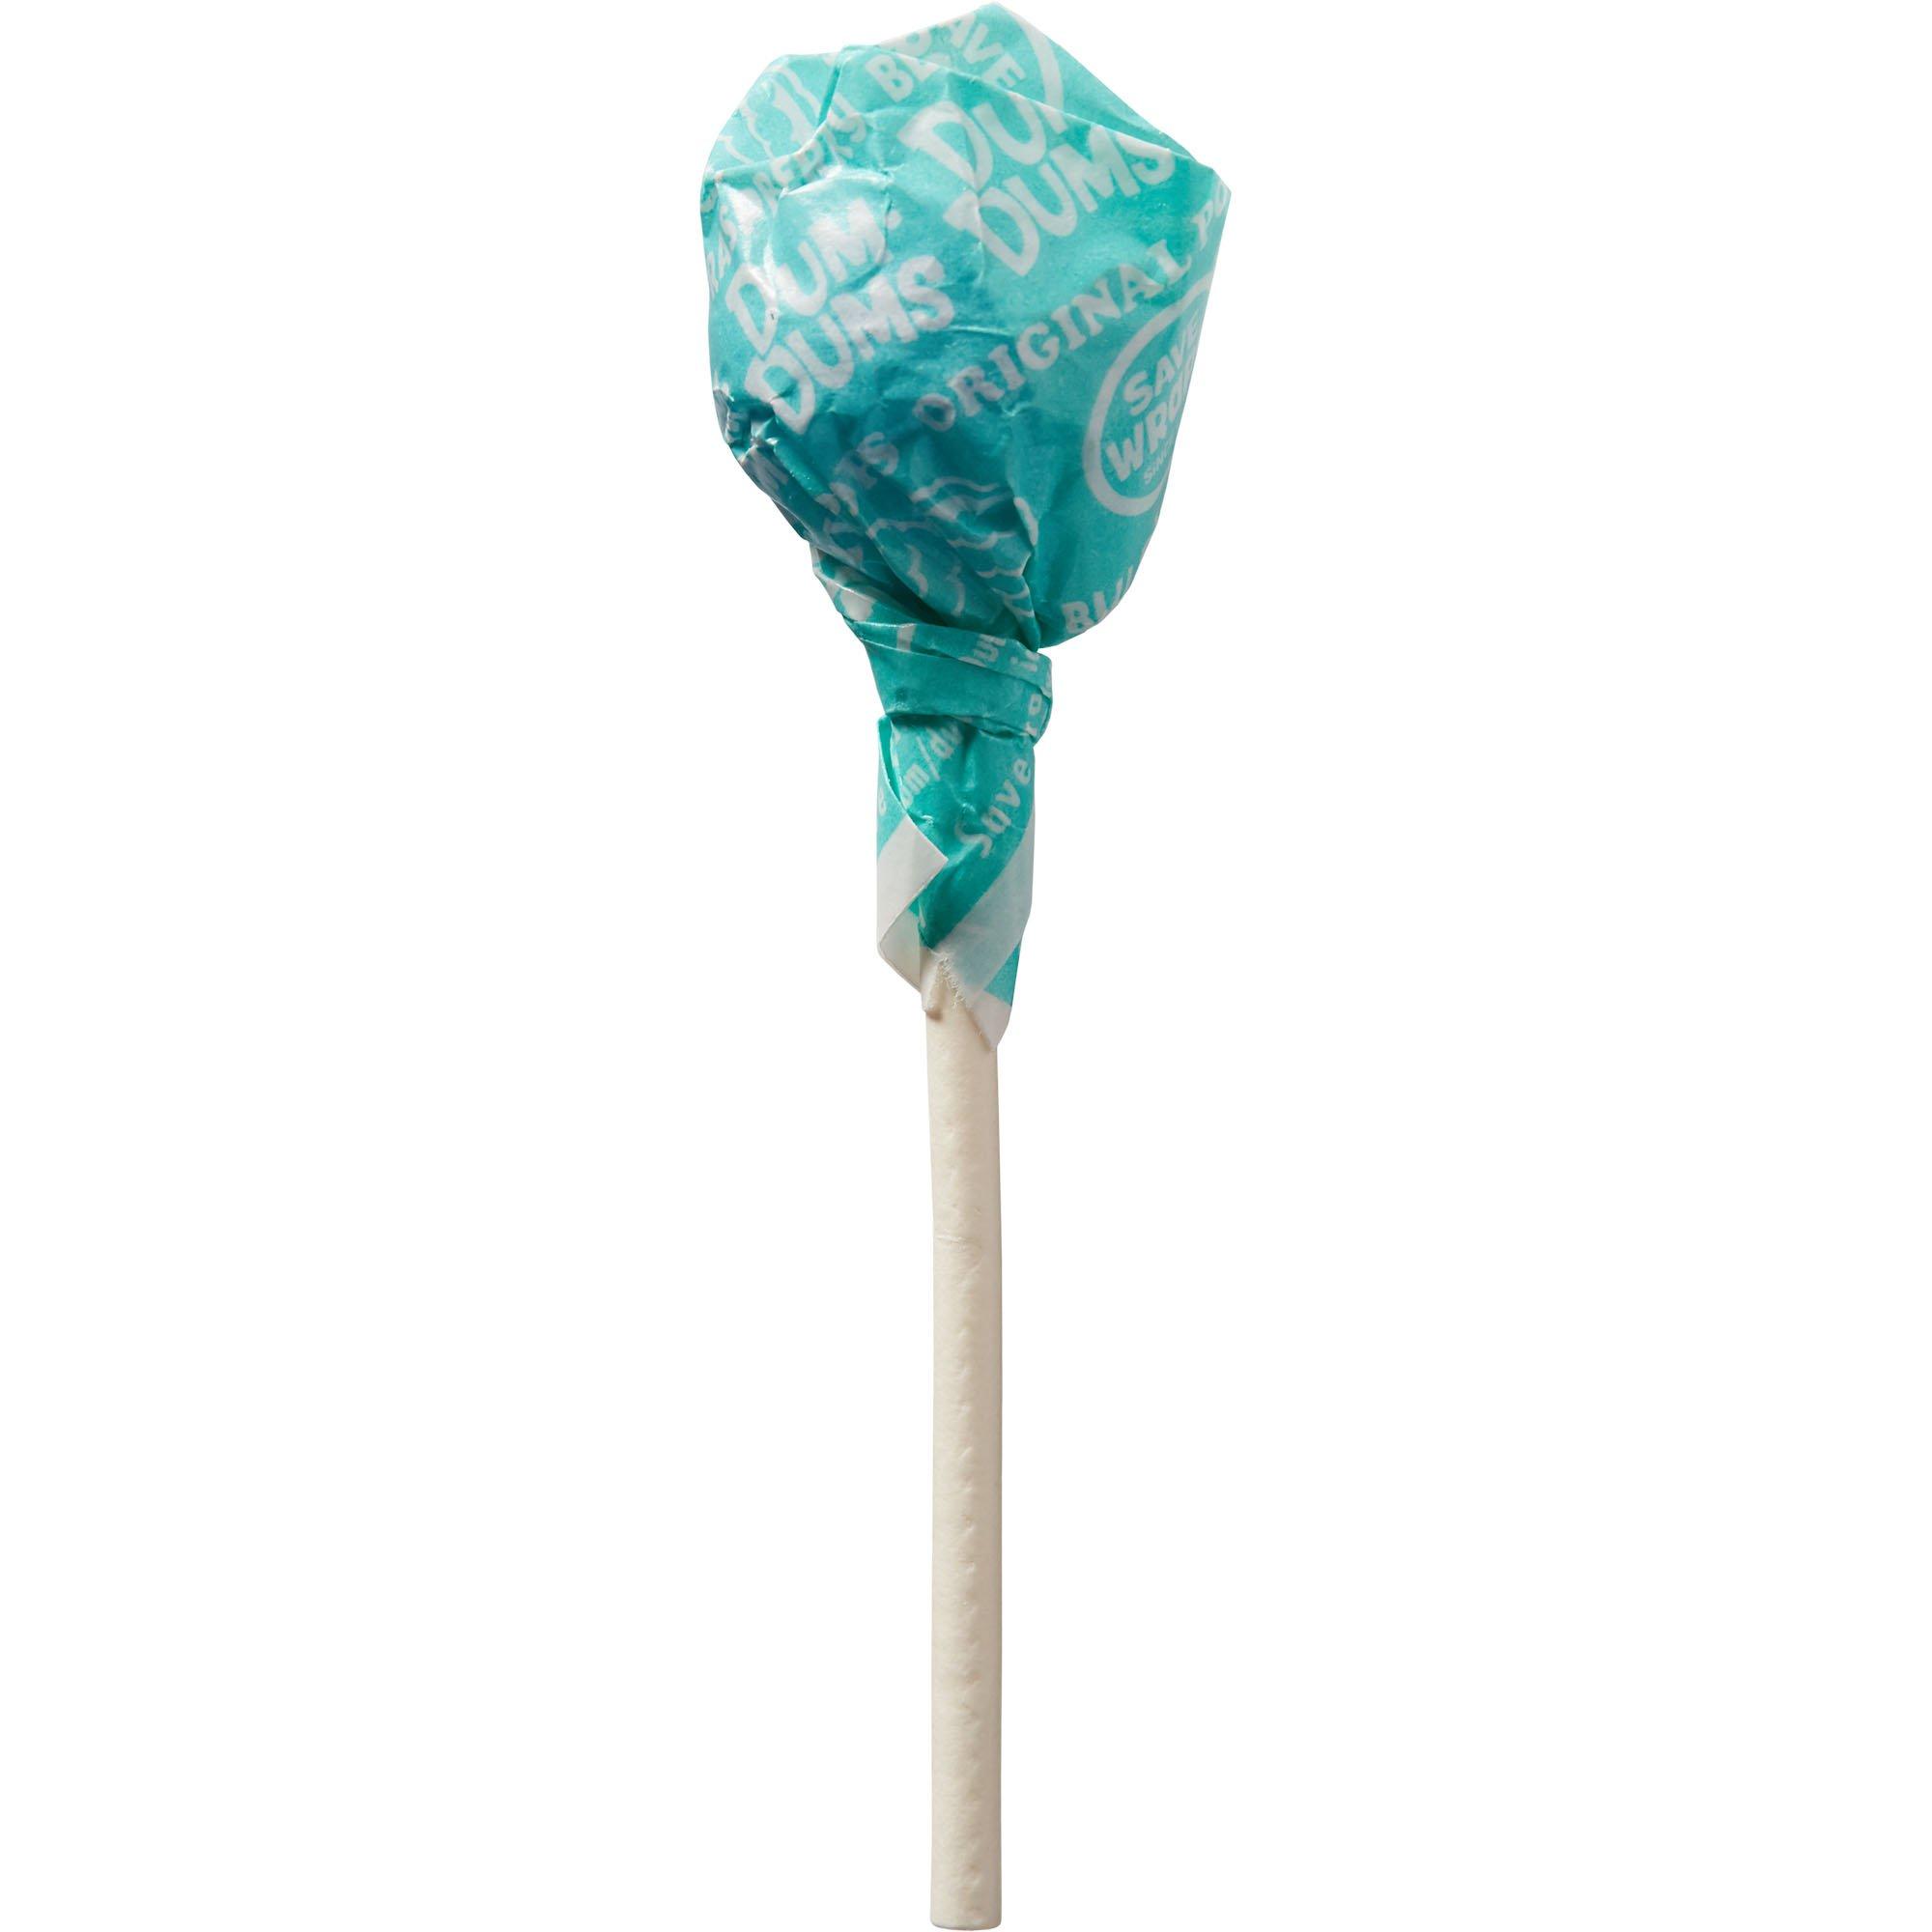 Robin's Egg Blue Dum Dums Lollipops, 80pc - Blue Raspberry Flavor